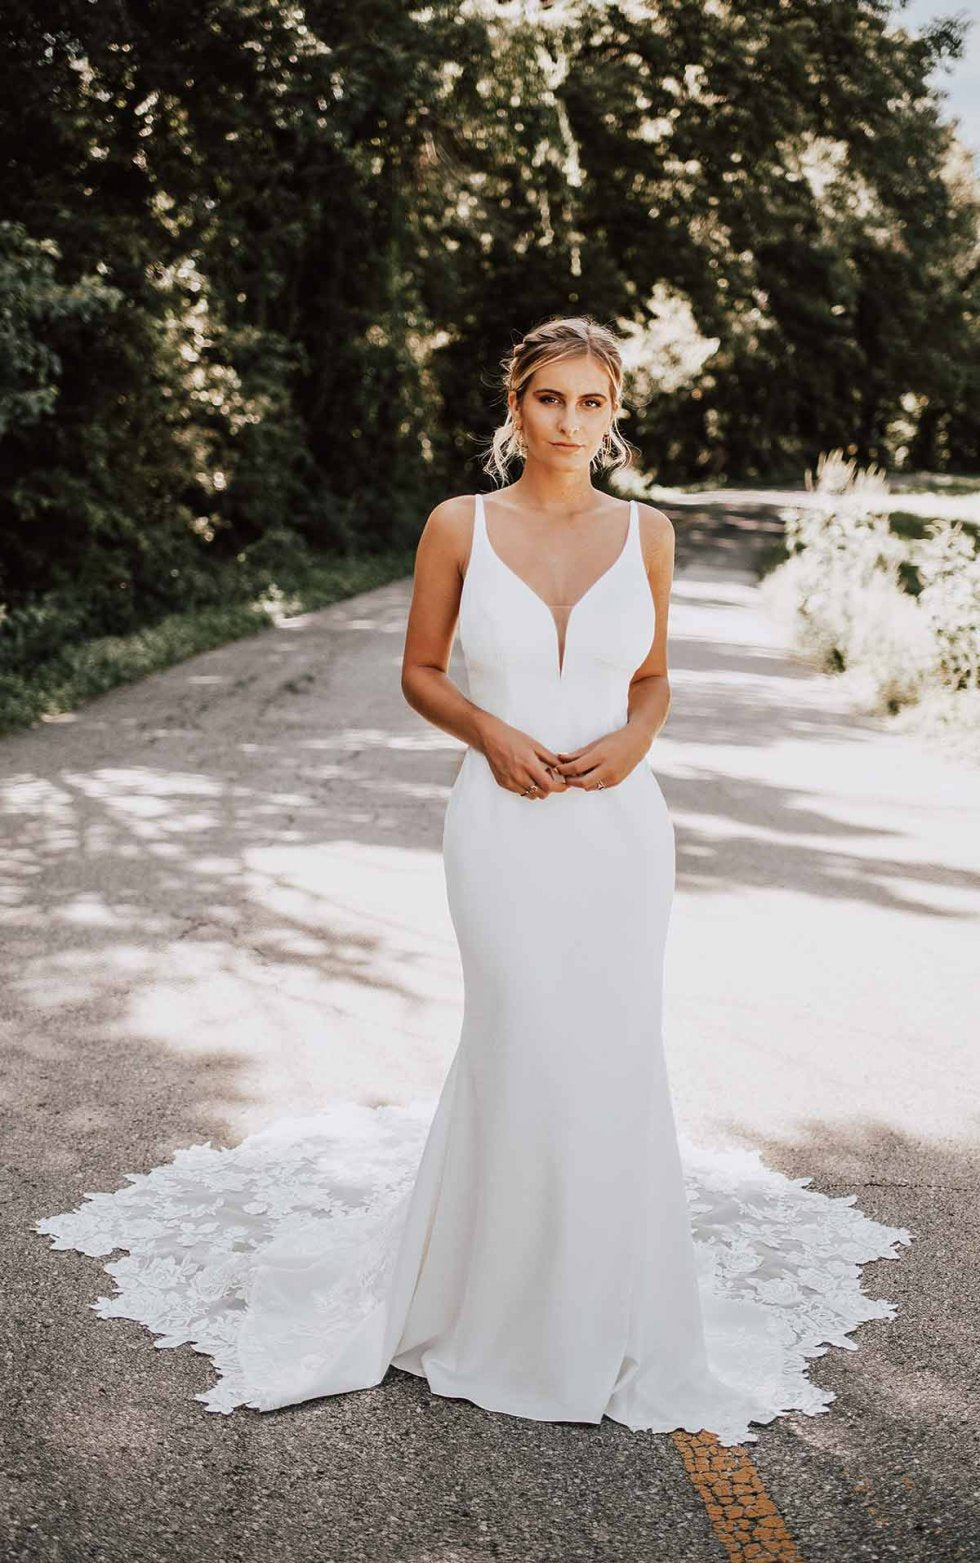 Stunning and sleek plunge v neck wedding dress with sheer floral train - off the rack wedding dress